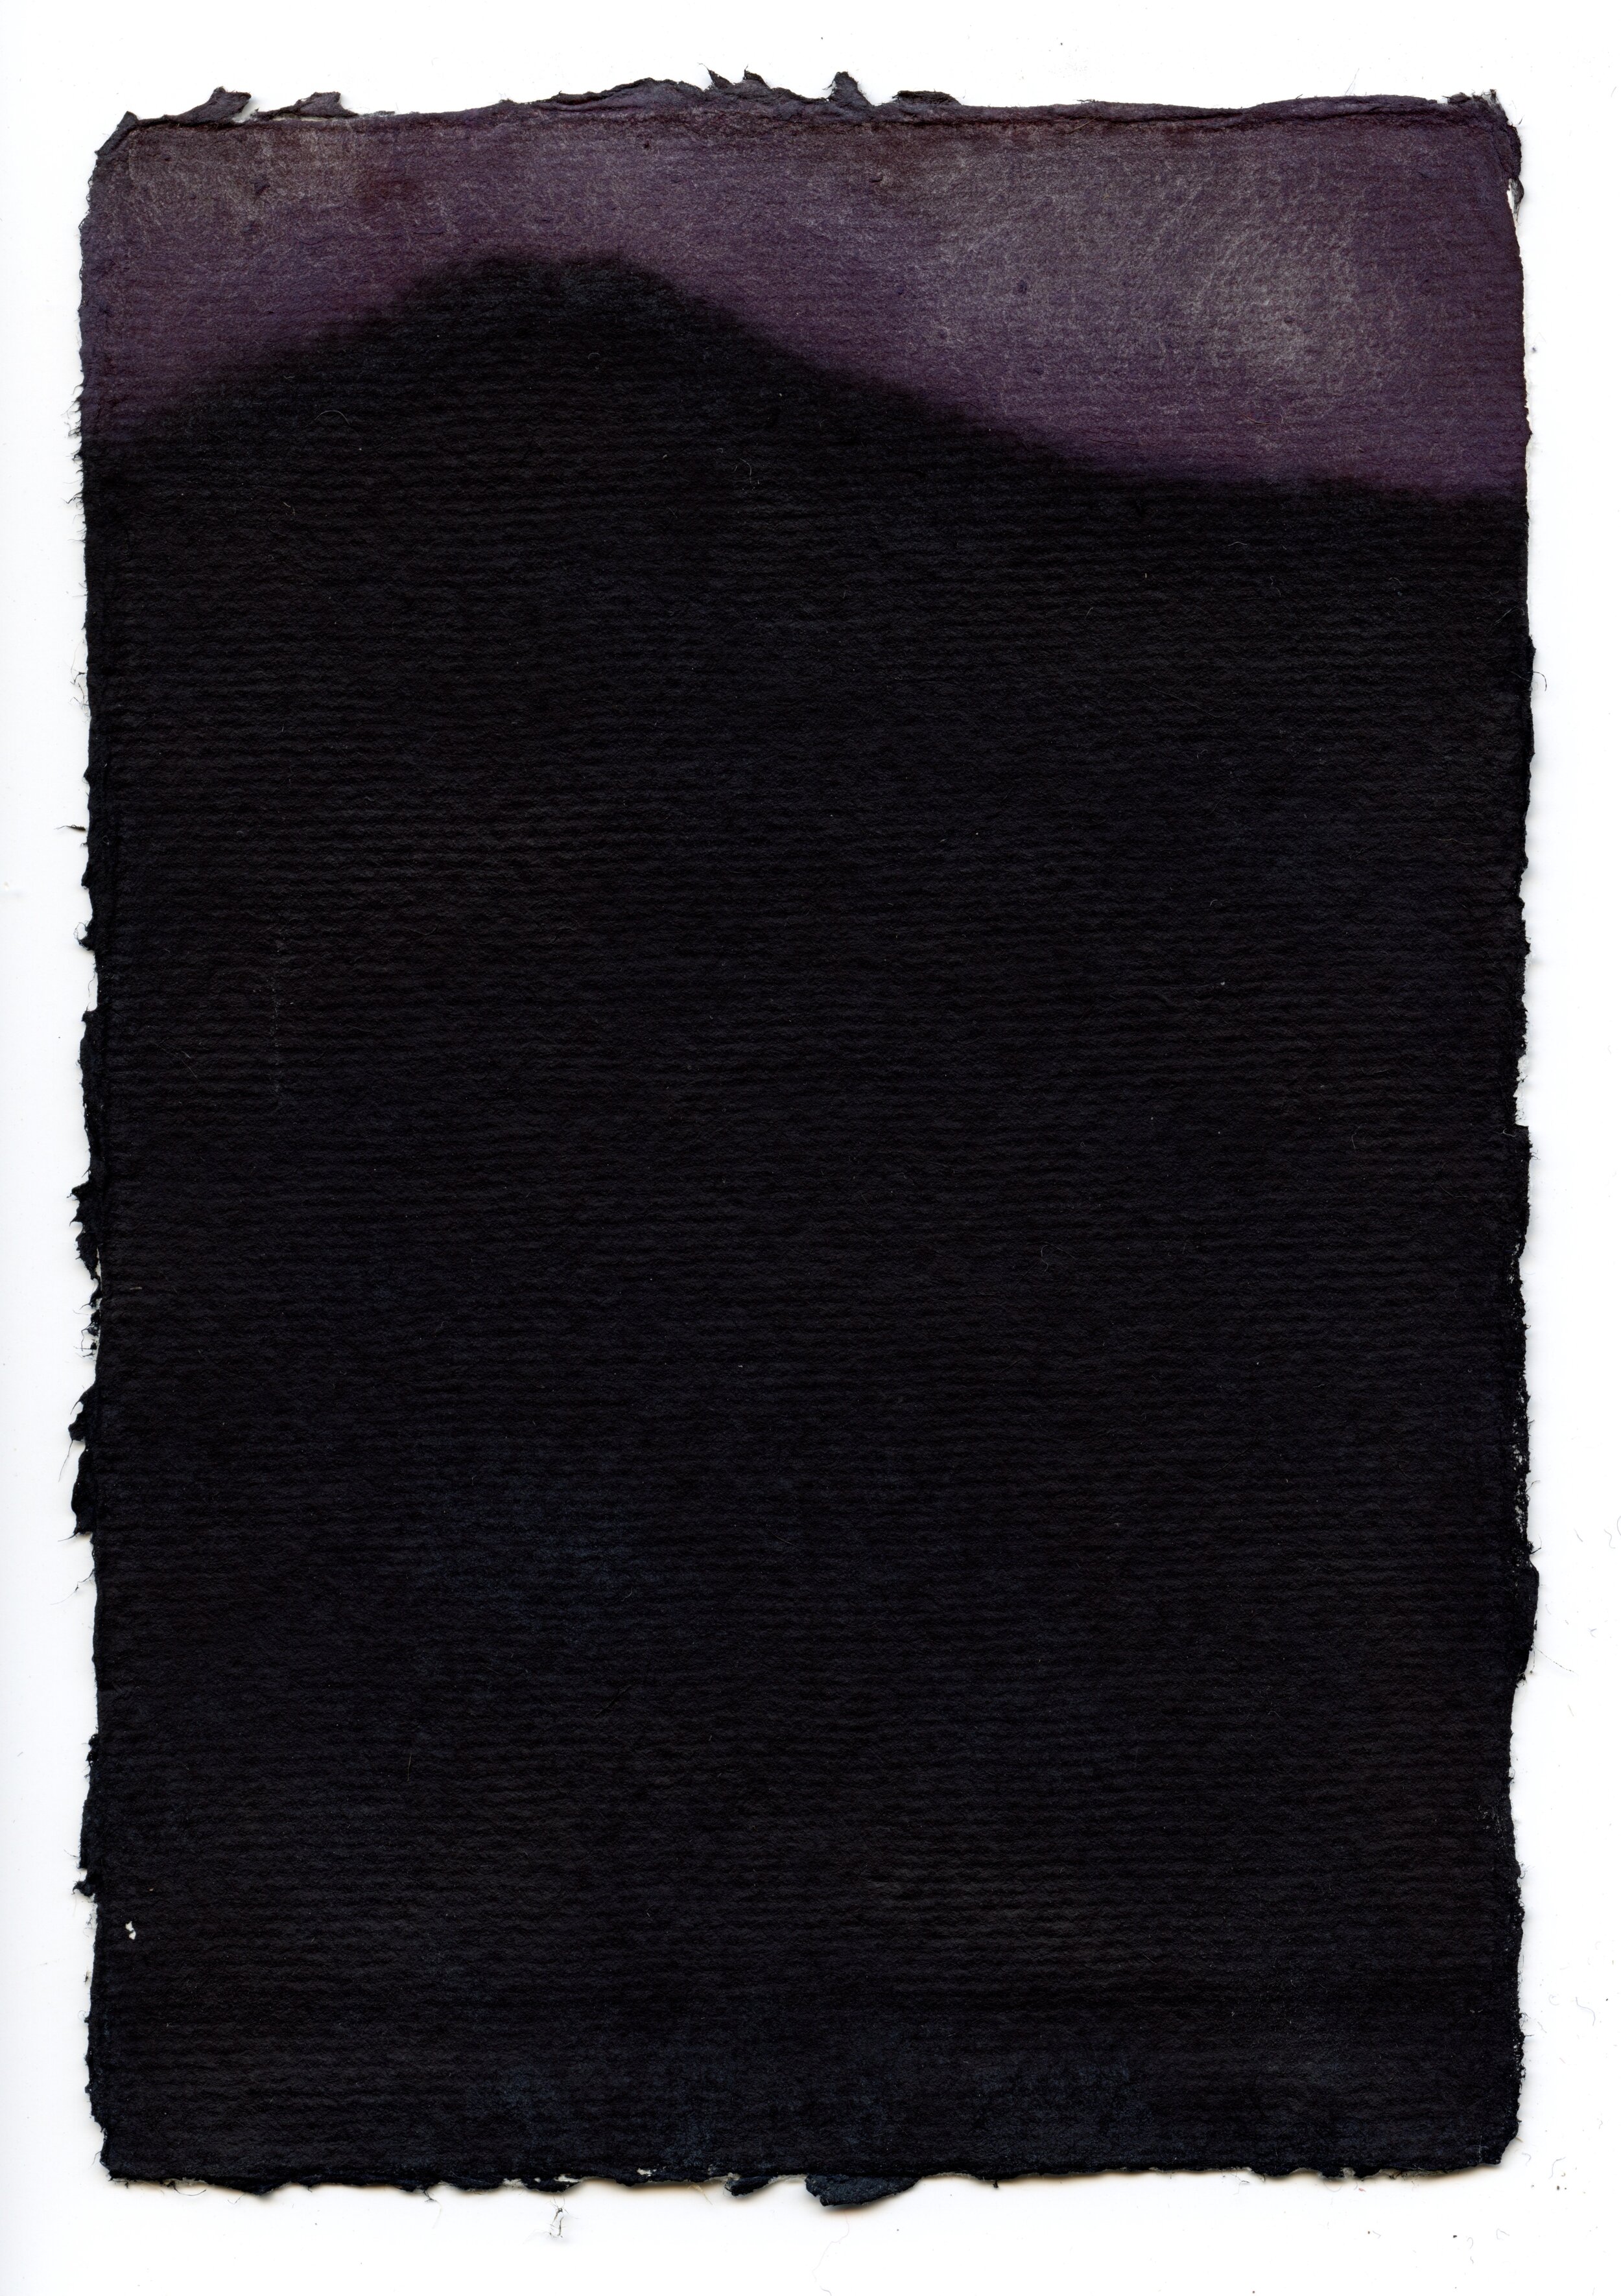   Purple Sky,  2020, 15 x 11cm, watercolour on handmade paper. 